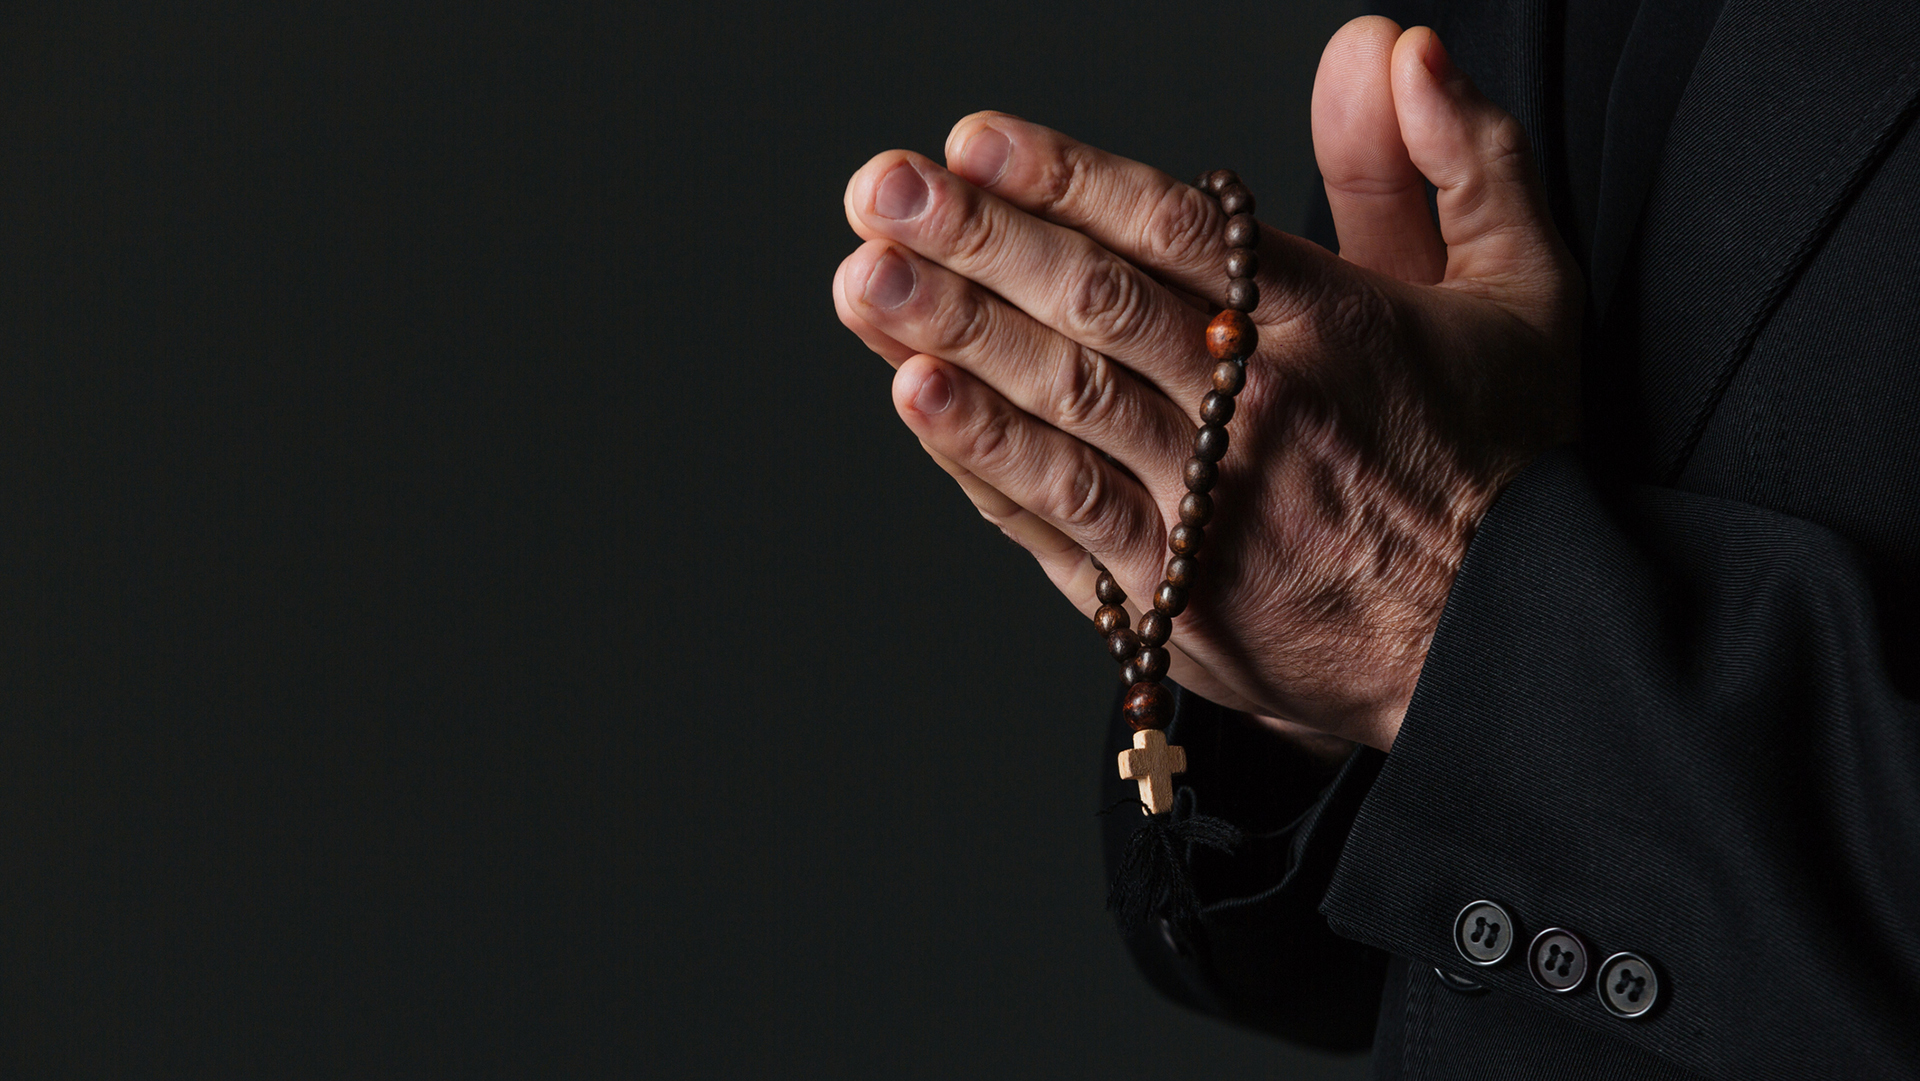 ‘¡Perdón!’: Obispos católicos colombianos